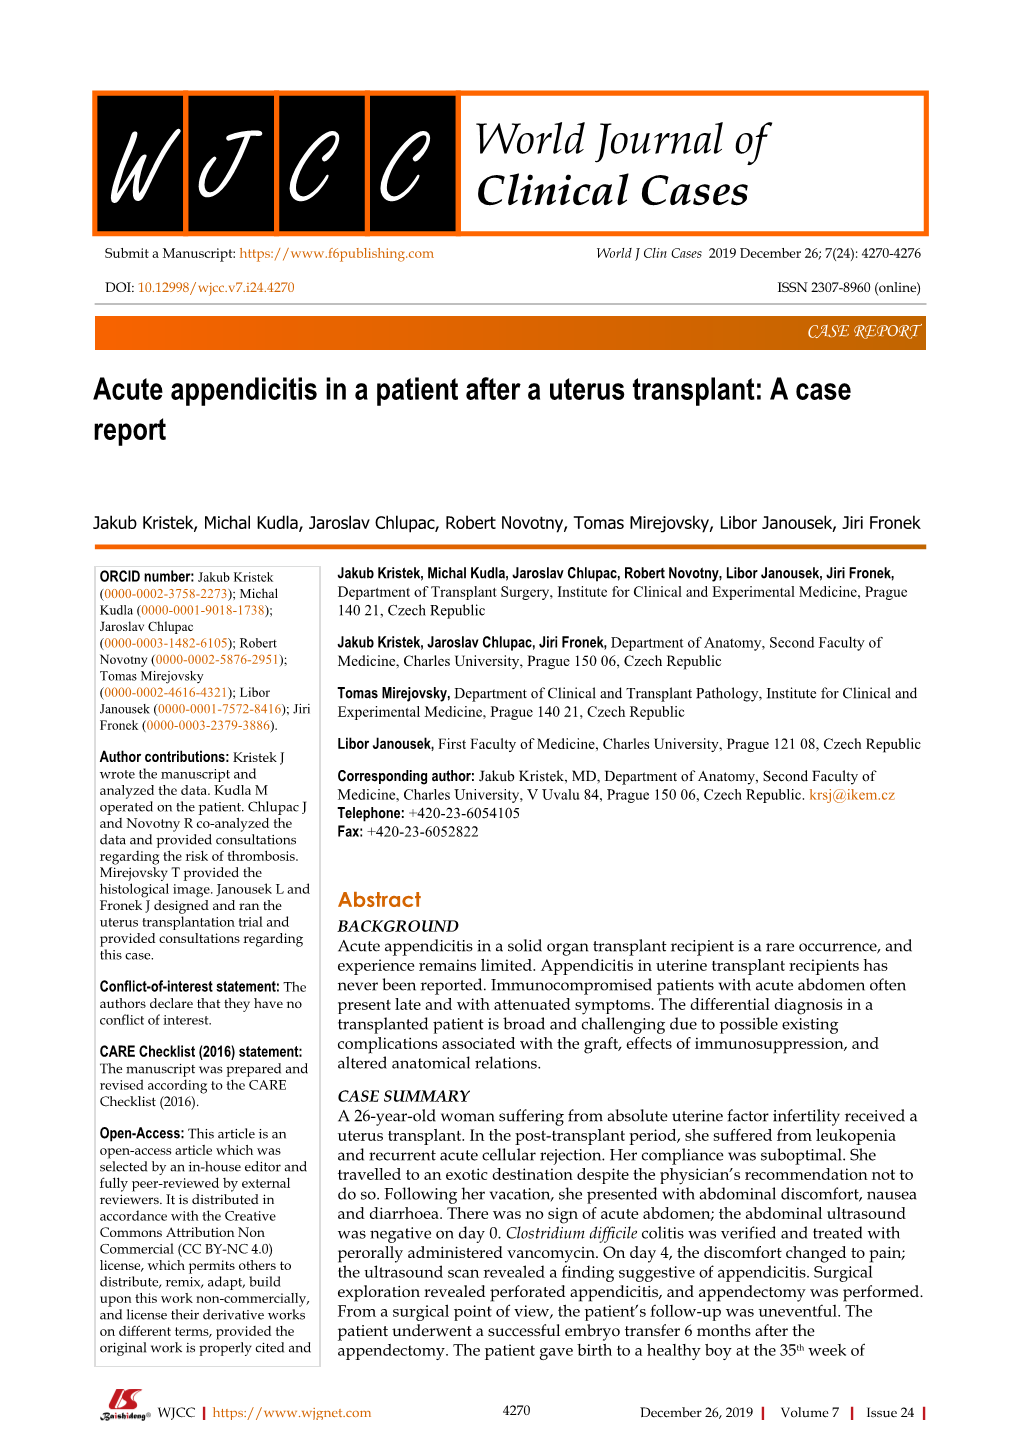 Acute Appendicitis in a Patient After a Uterus Transplant: a Case Report